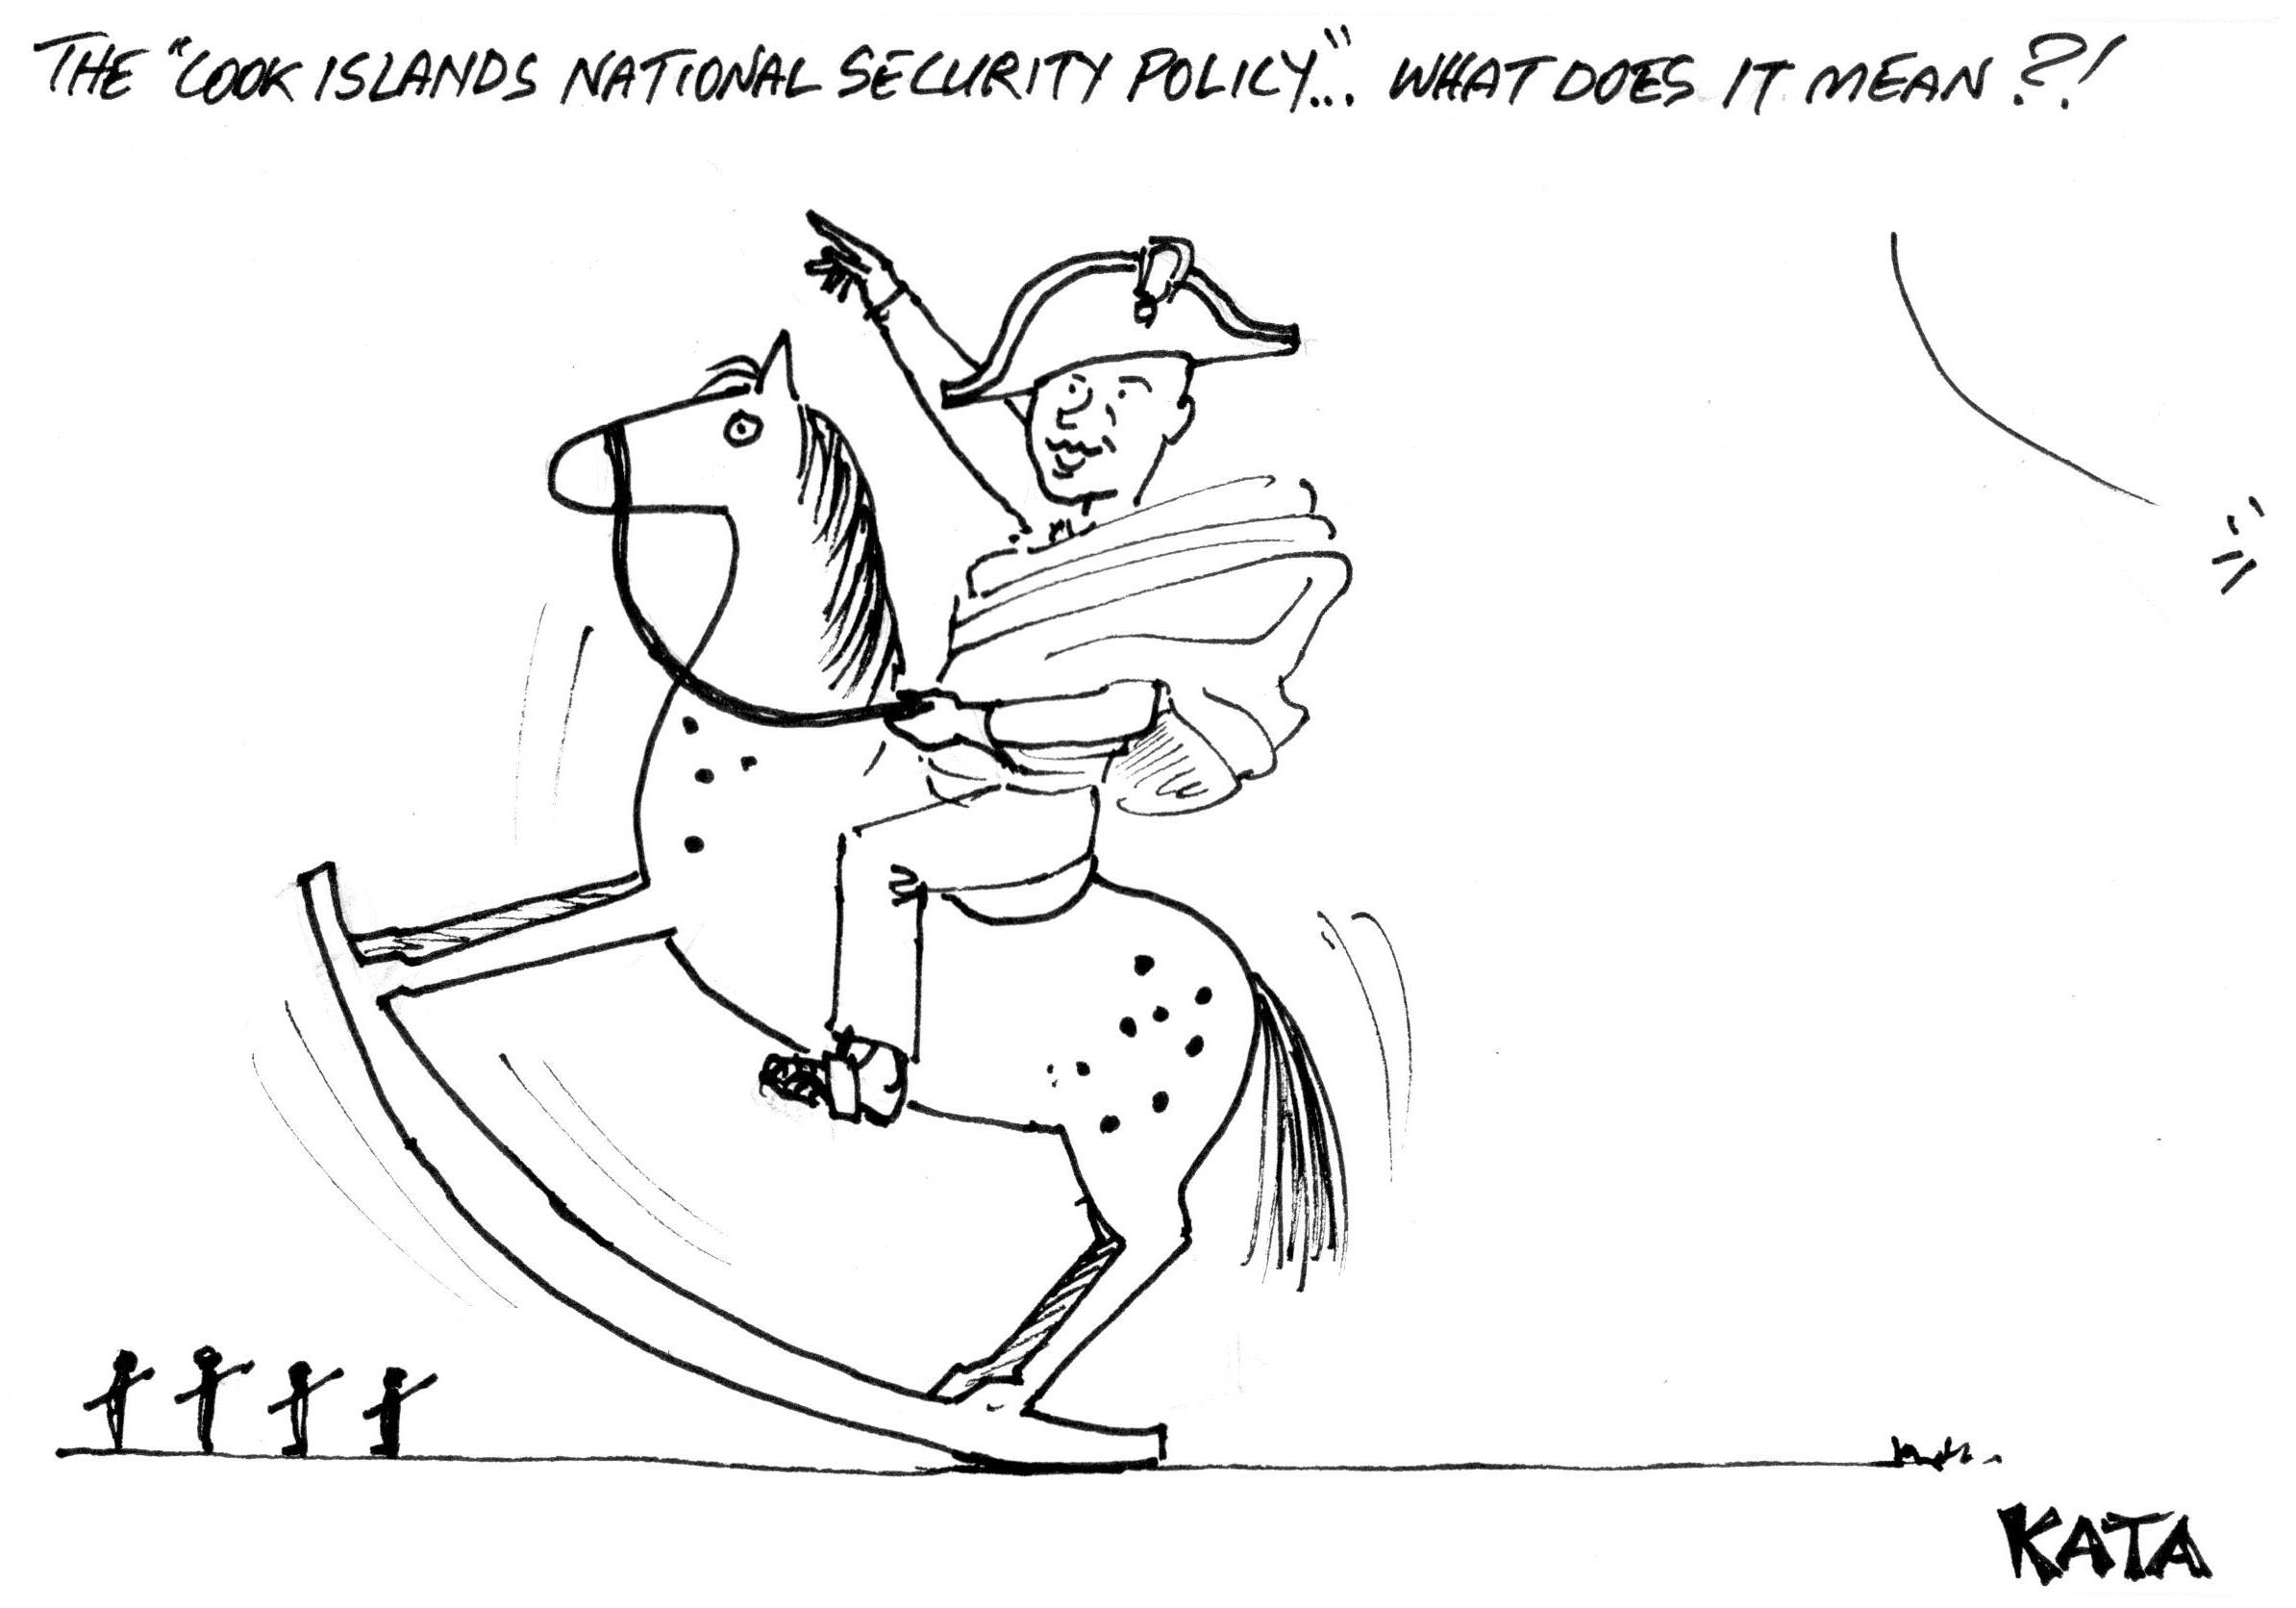 Kata: CI National security policy